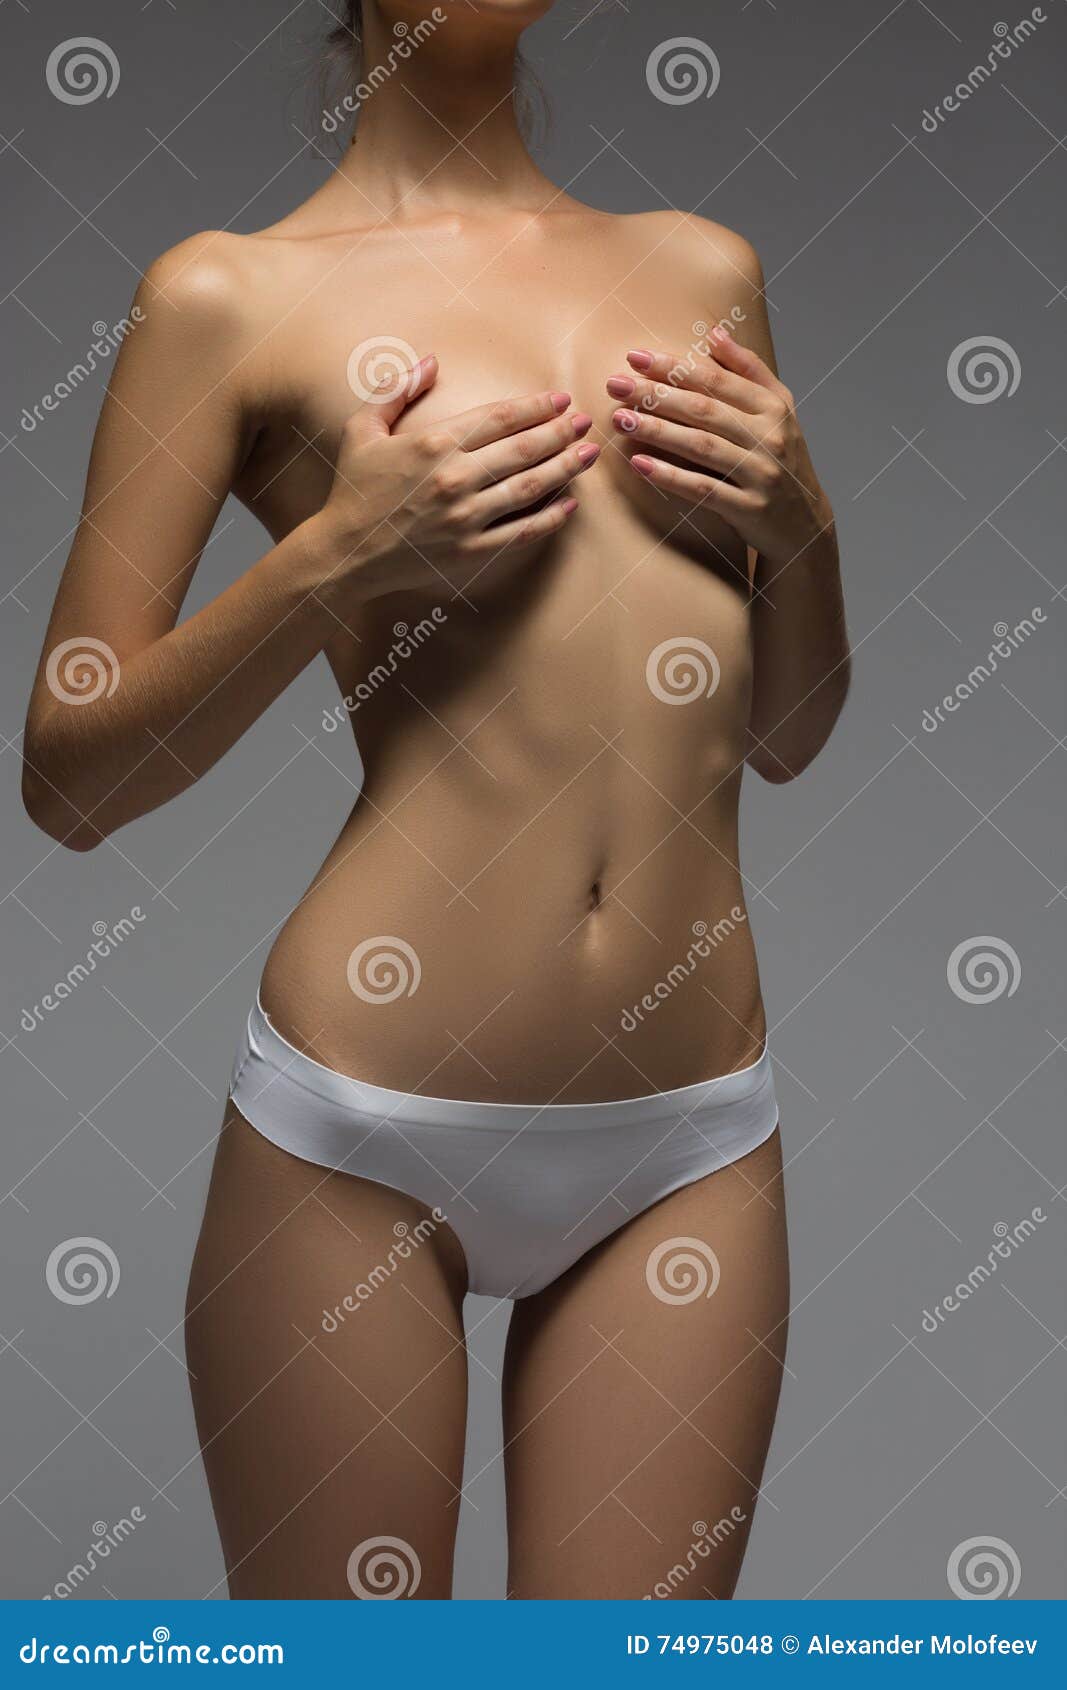 Topless Female Models get it